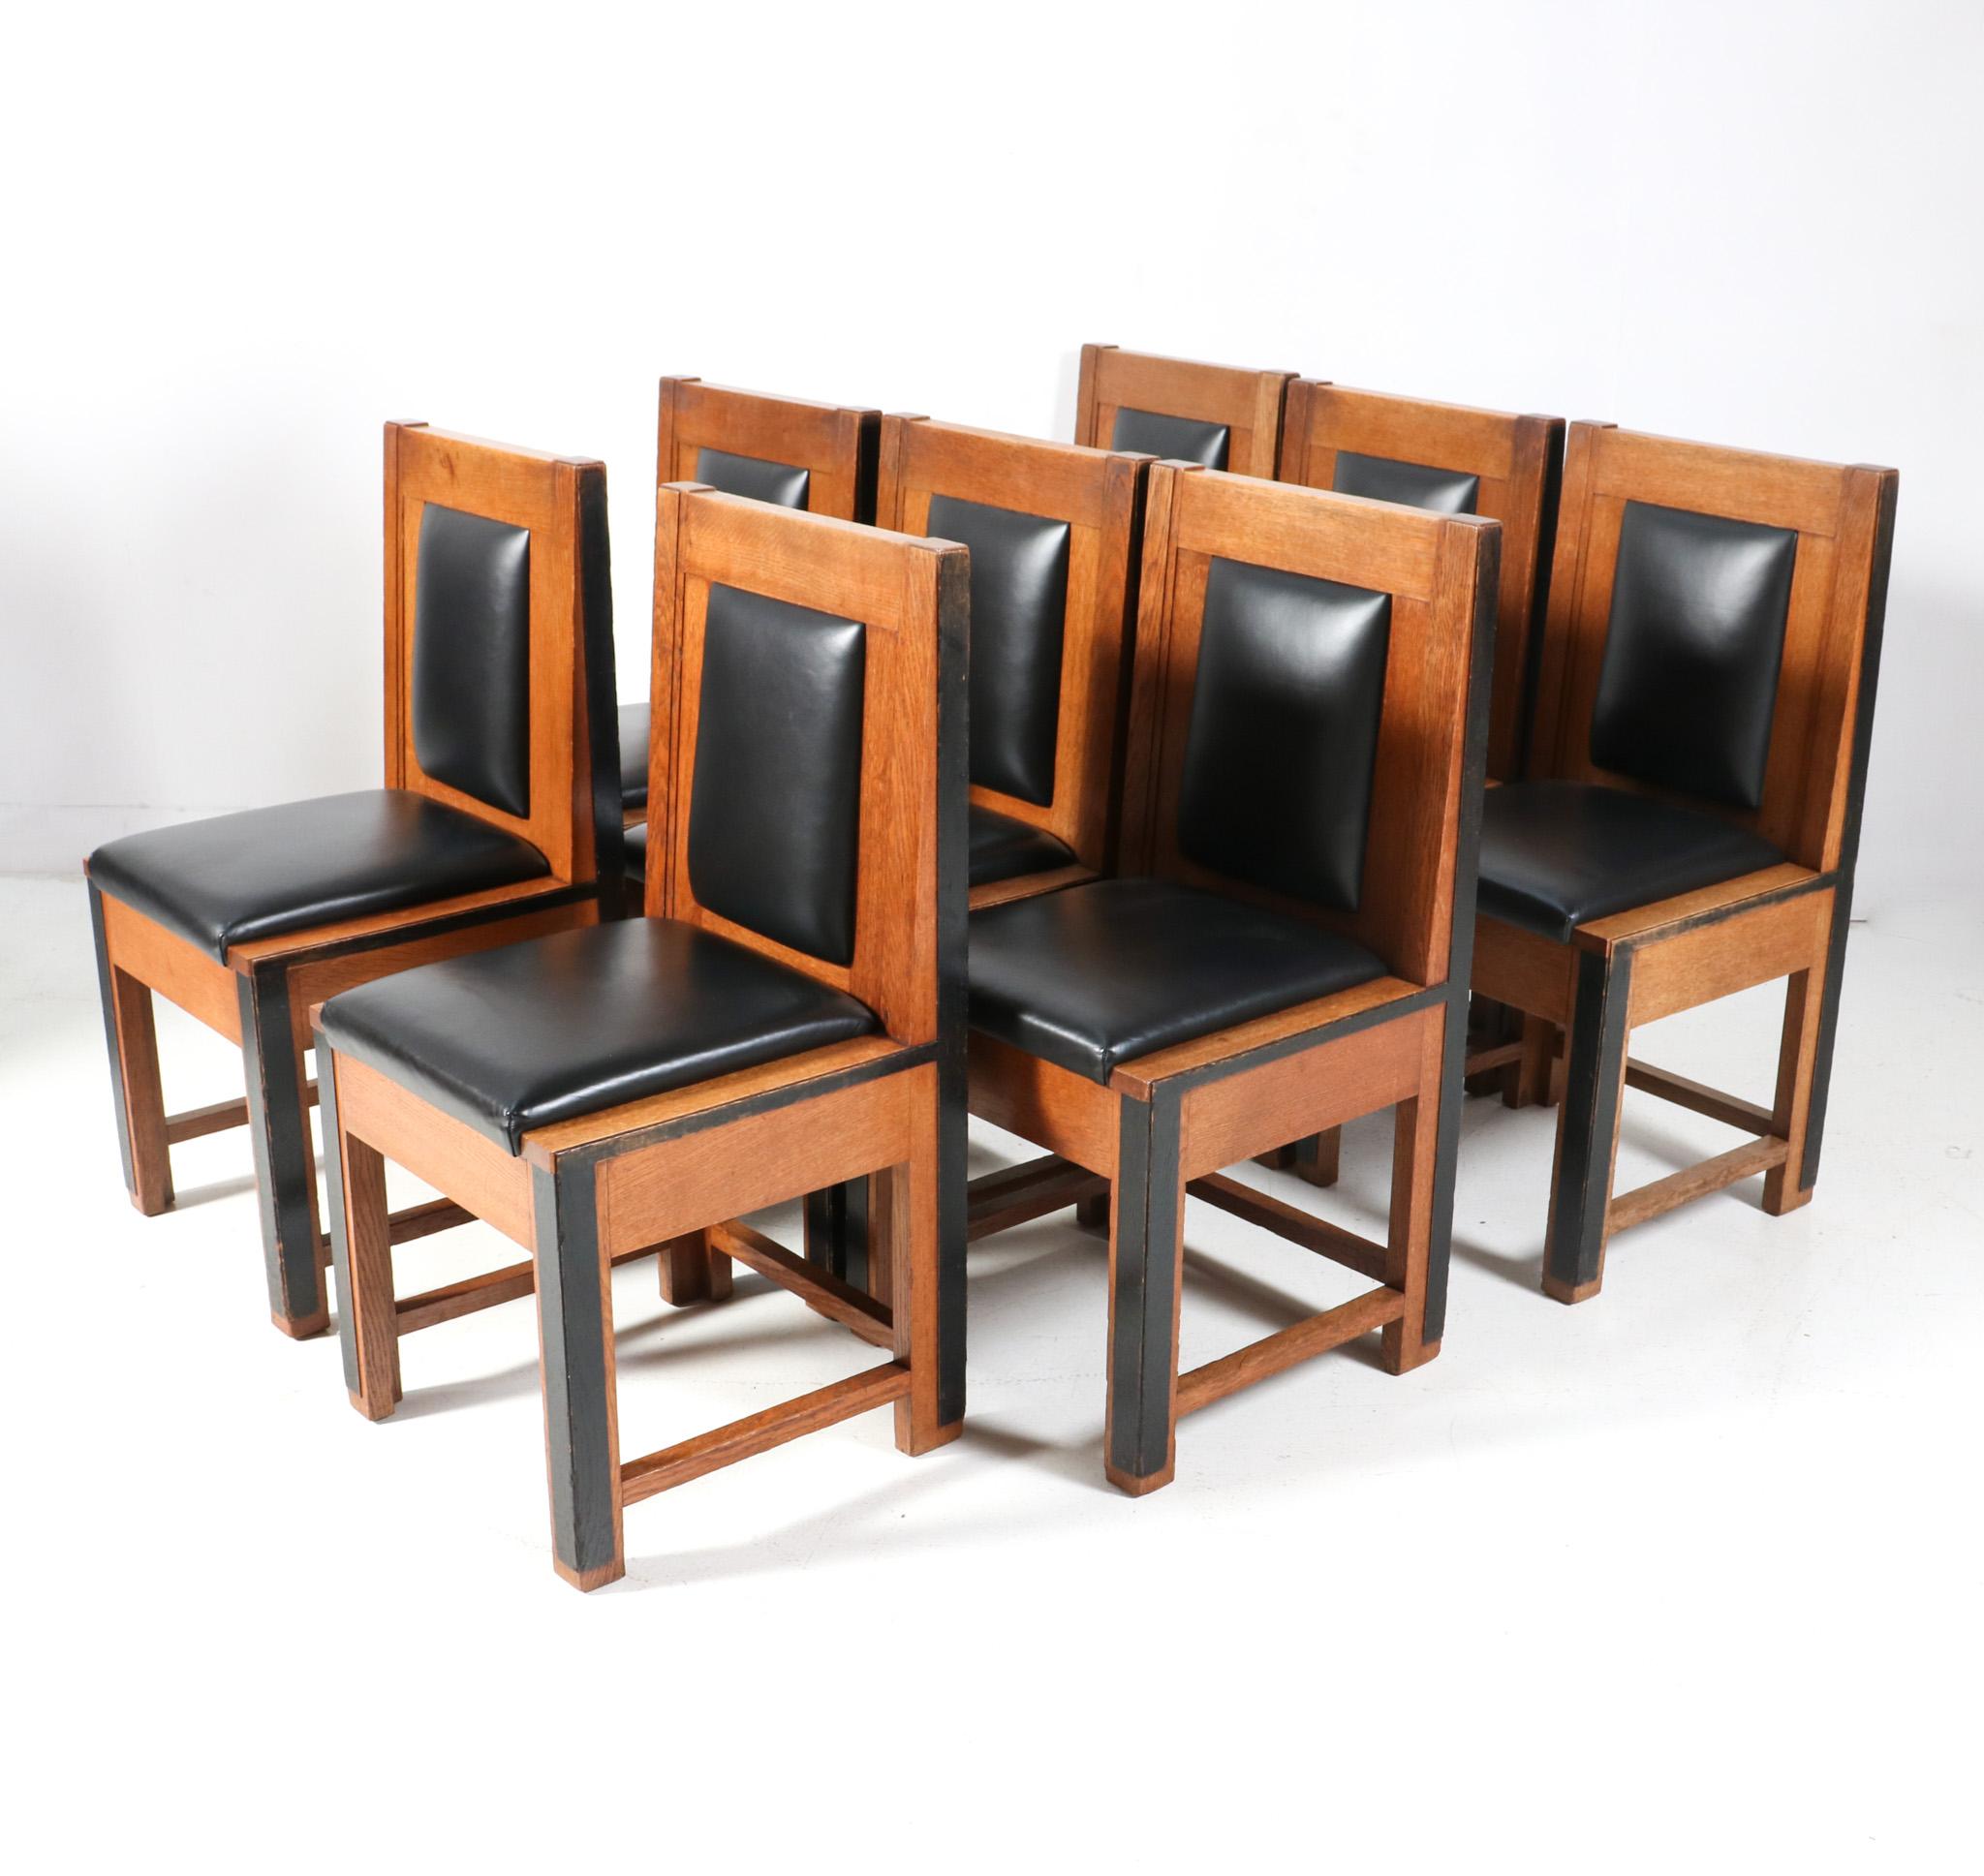 Dutch Eight Oak Art Deco Modernist Chairs by Fa. Randoe Haarlem, 1920s For Sale